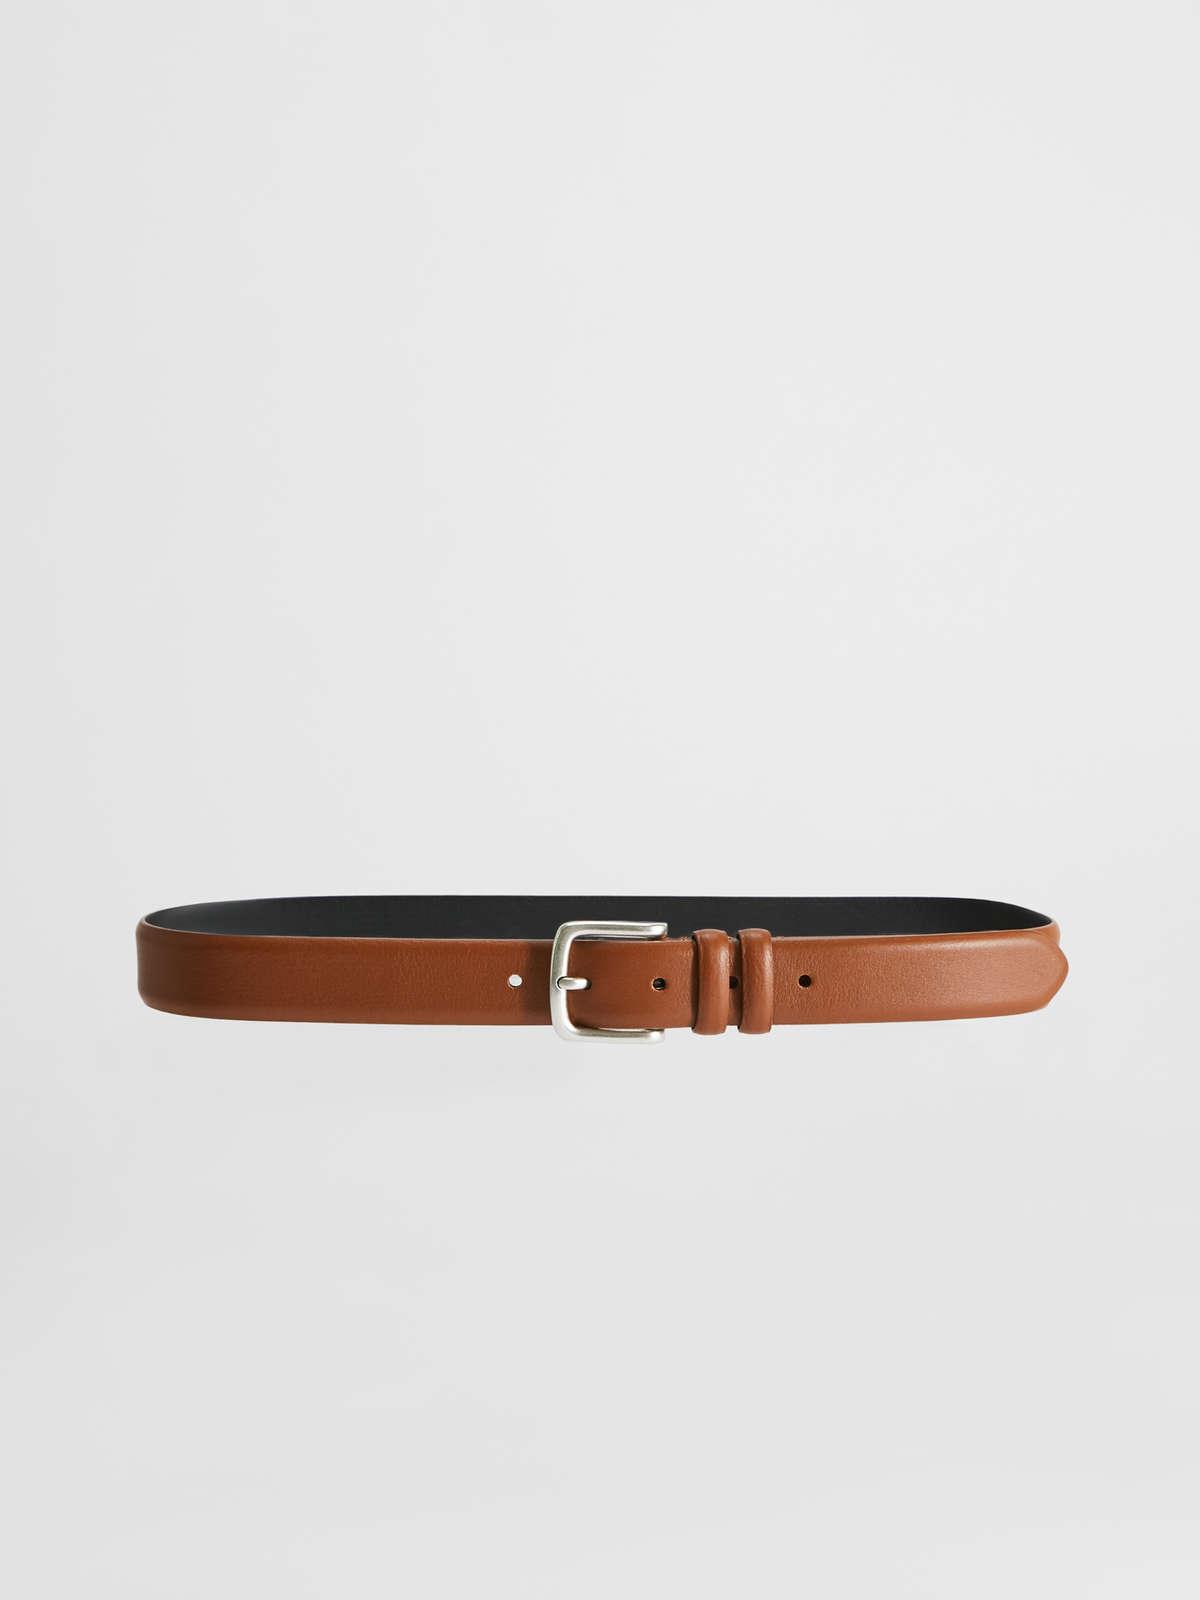 Womens Max Mara Belts | Leather Belt Tobacco